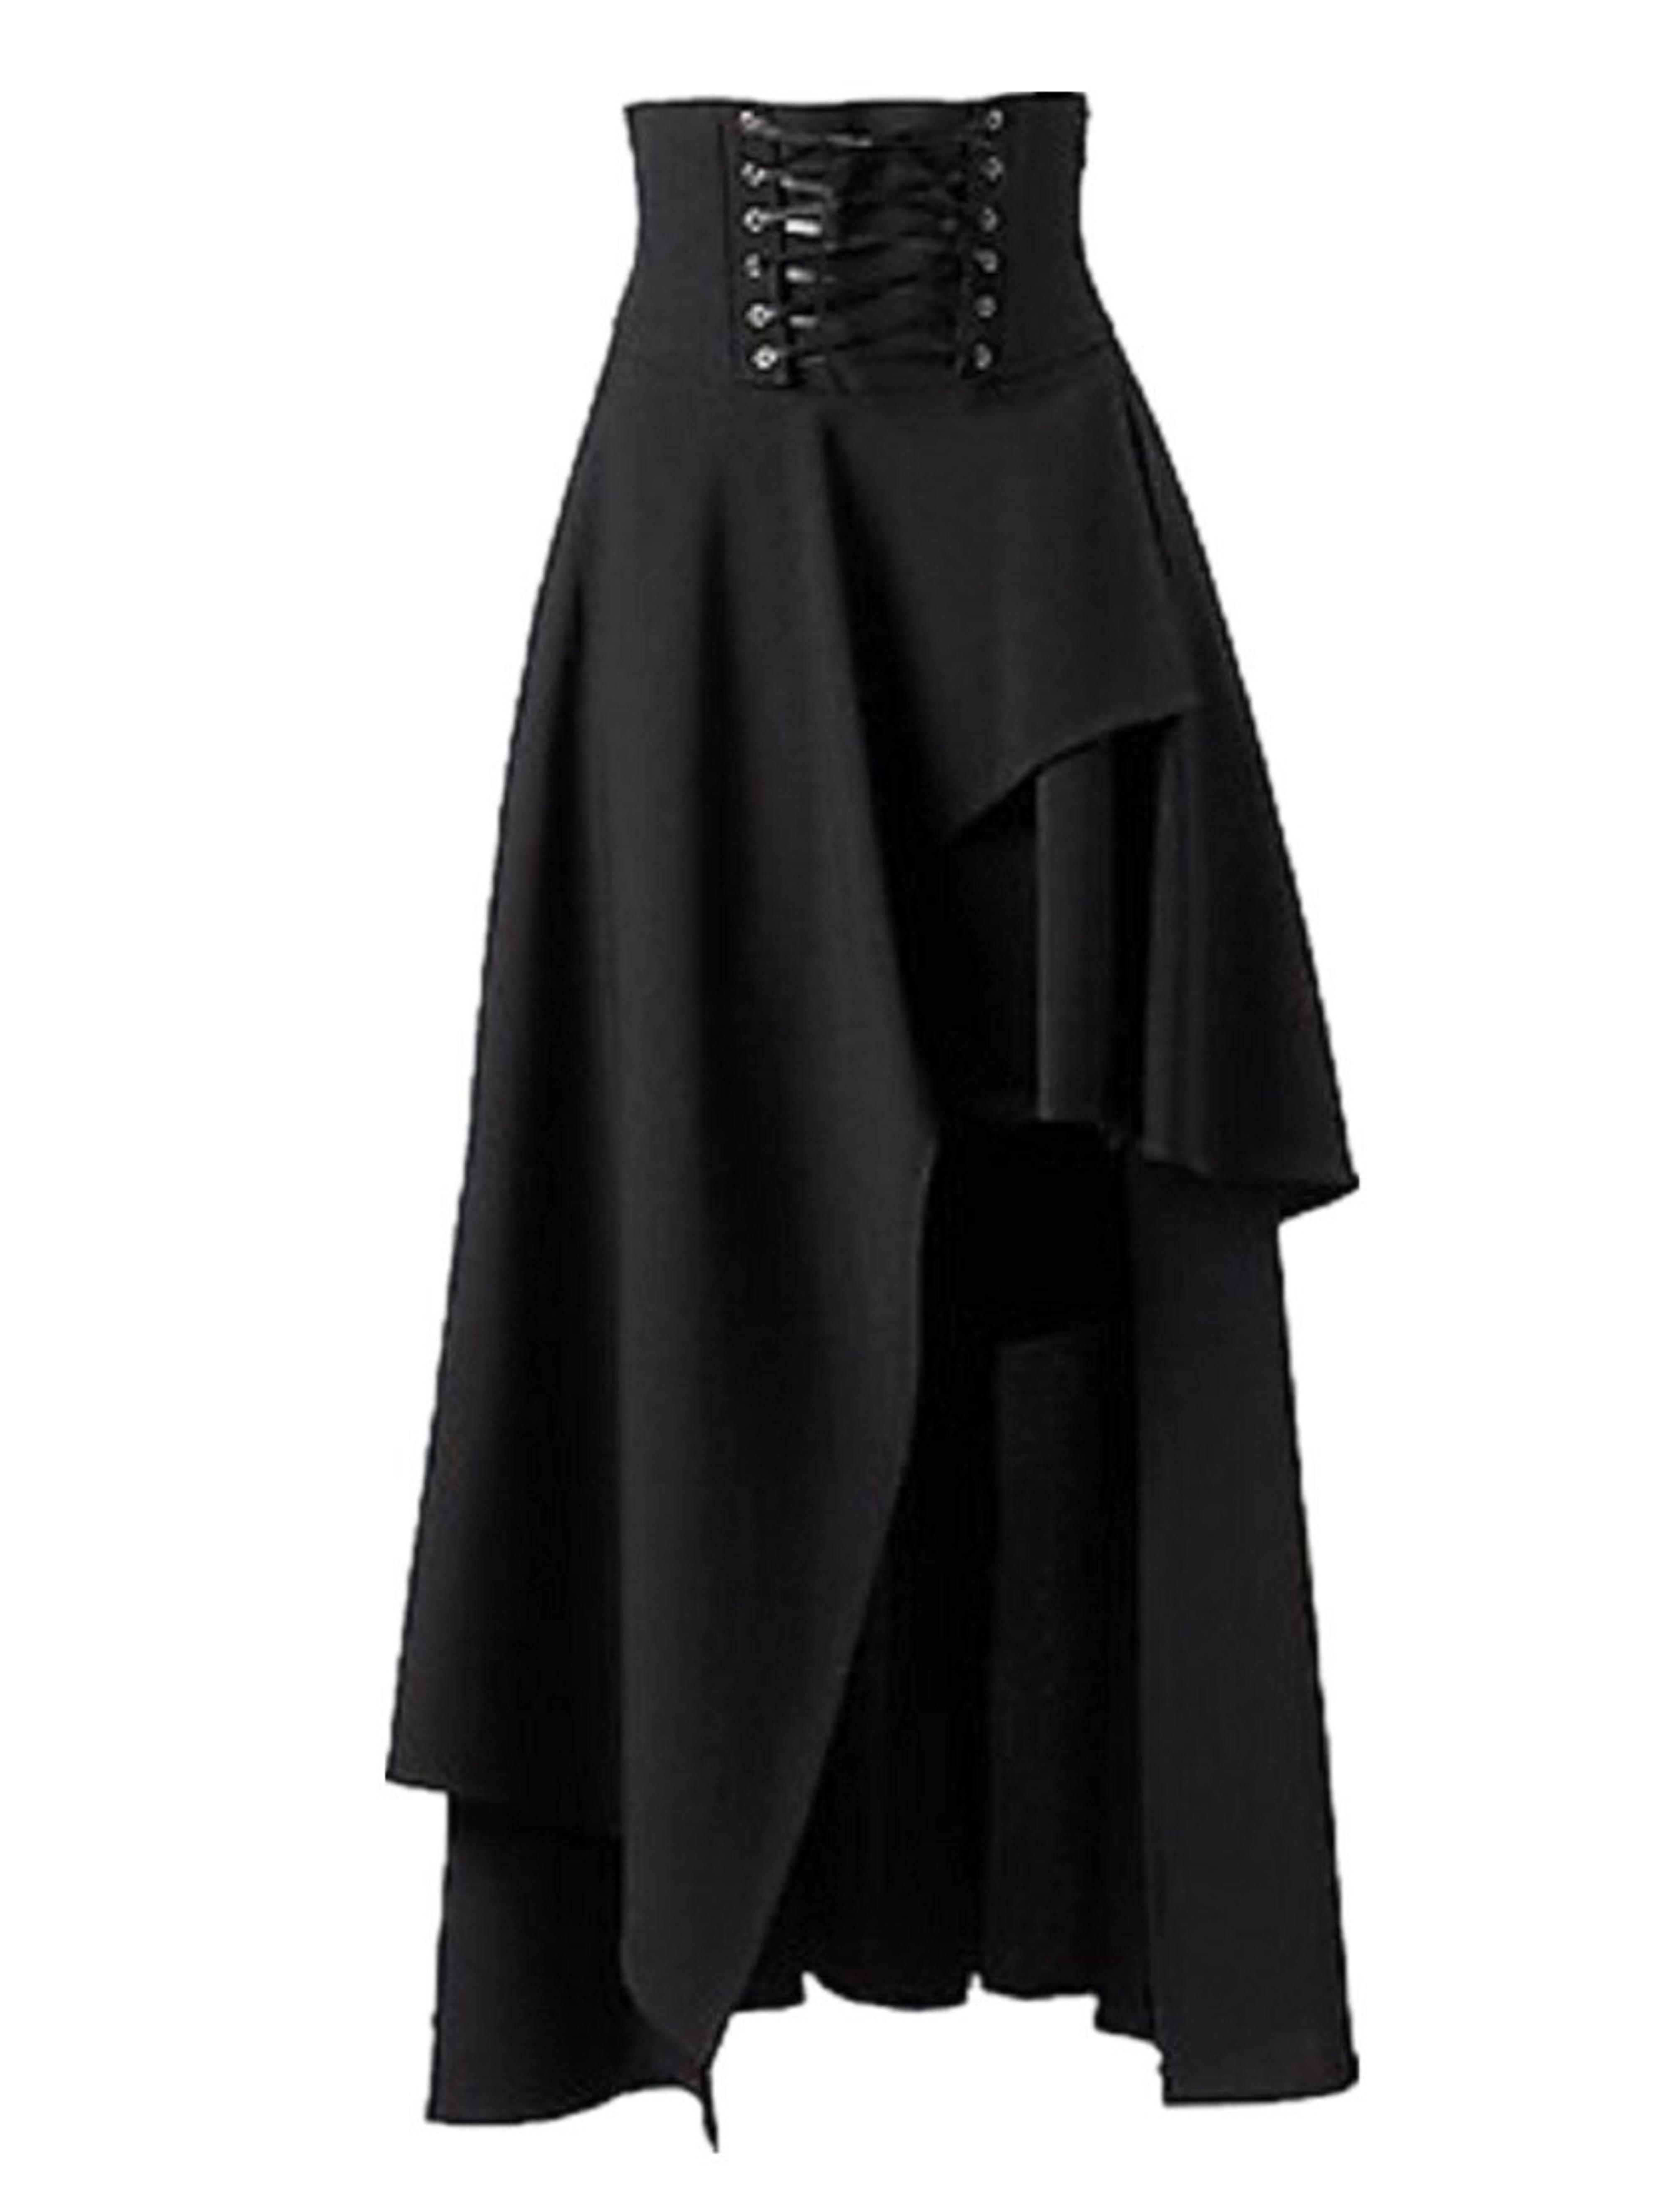 Sorrica Women's Victorian Lolita Skirt Steampunk Vintage Style Skirt (M, Black) at Amazon Women’s Clothing store